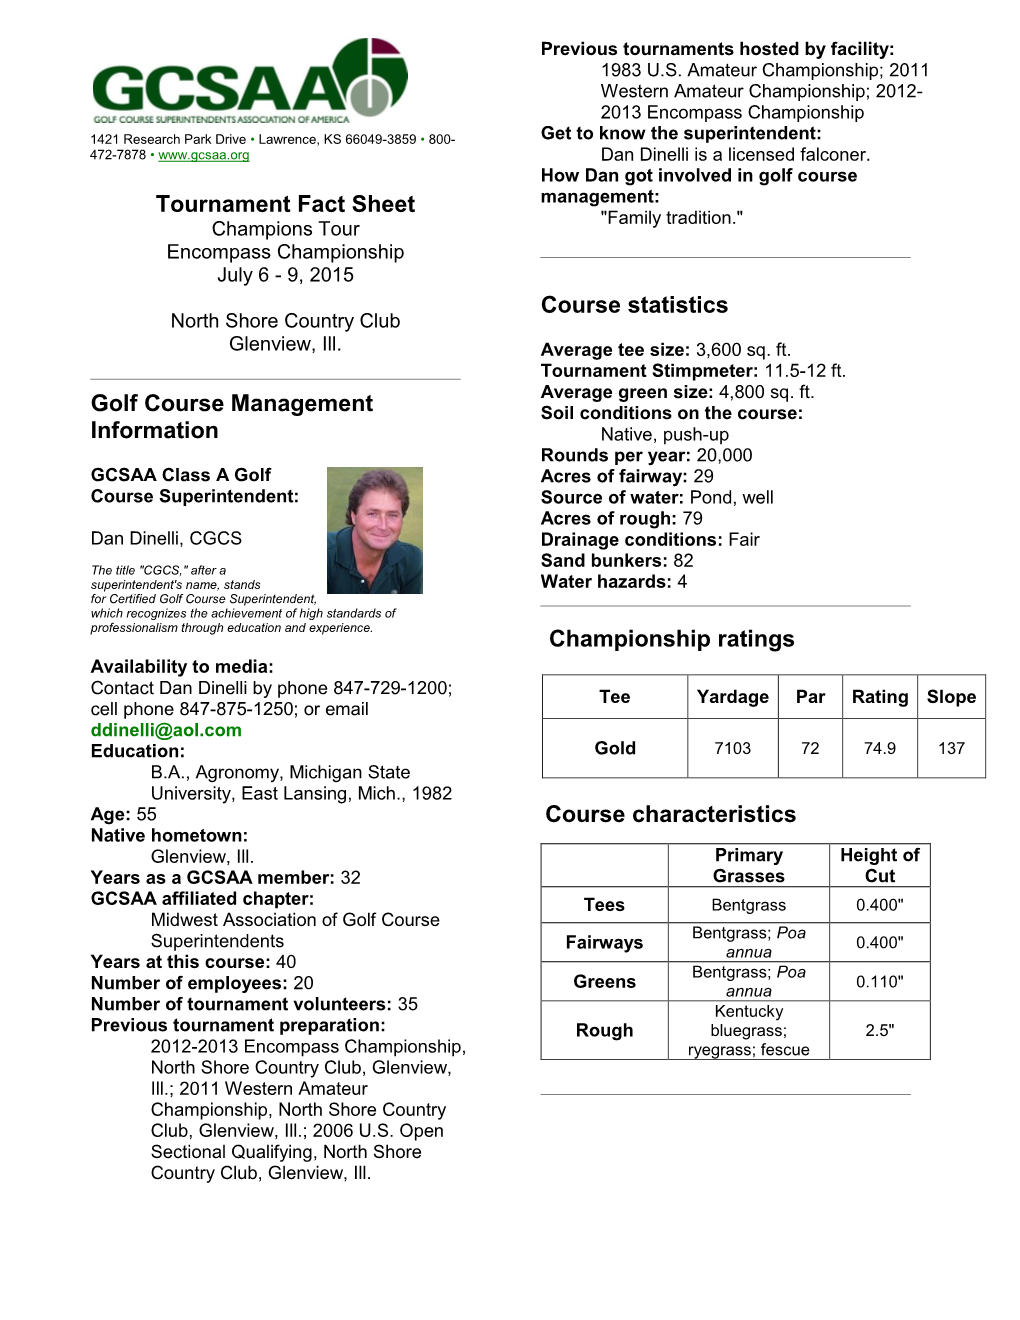 Tournament Fact Sheet Golf Course Management Information Course Statistics Championship Ratings Course Characteristics